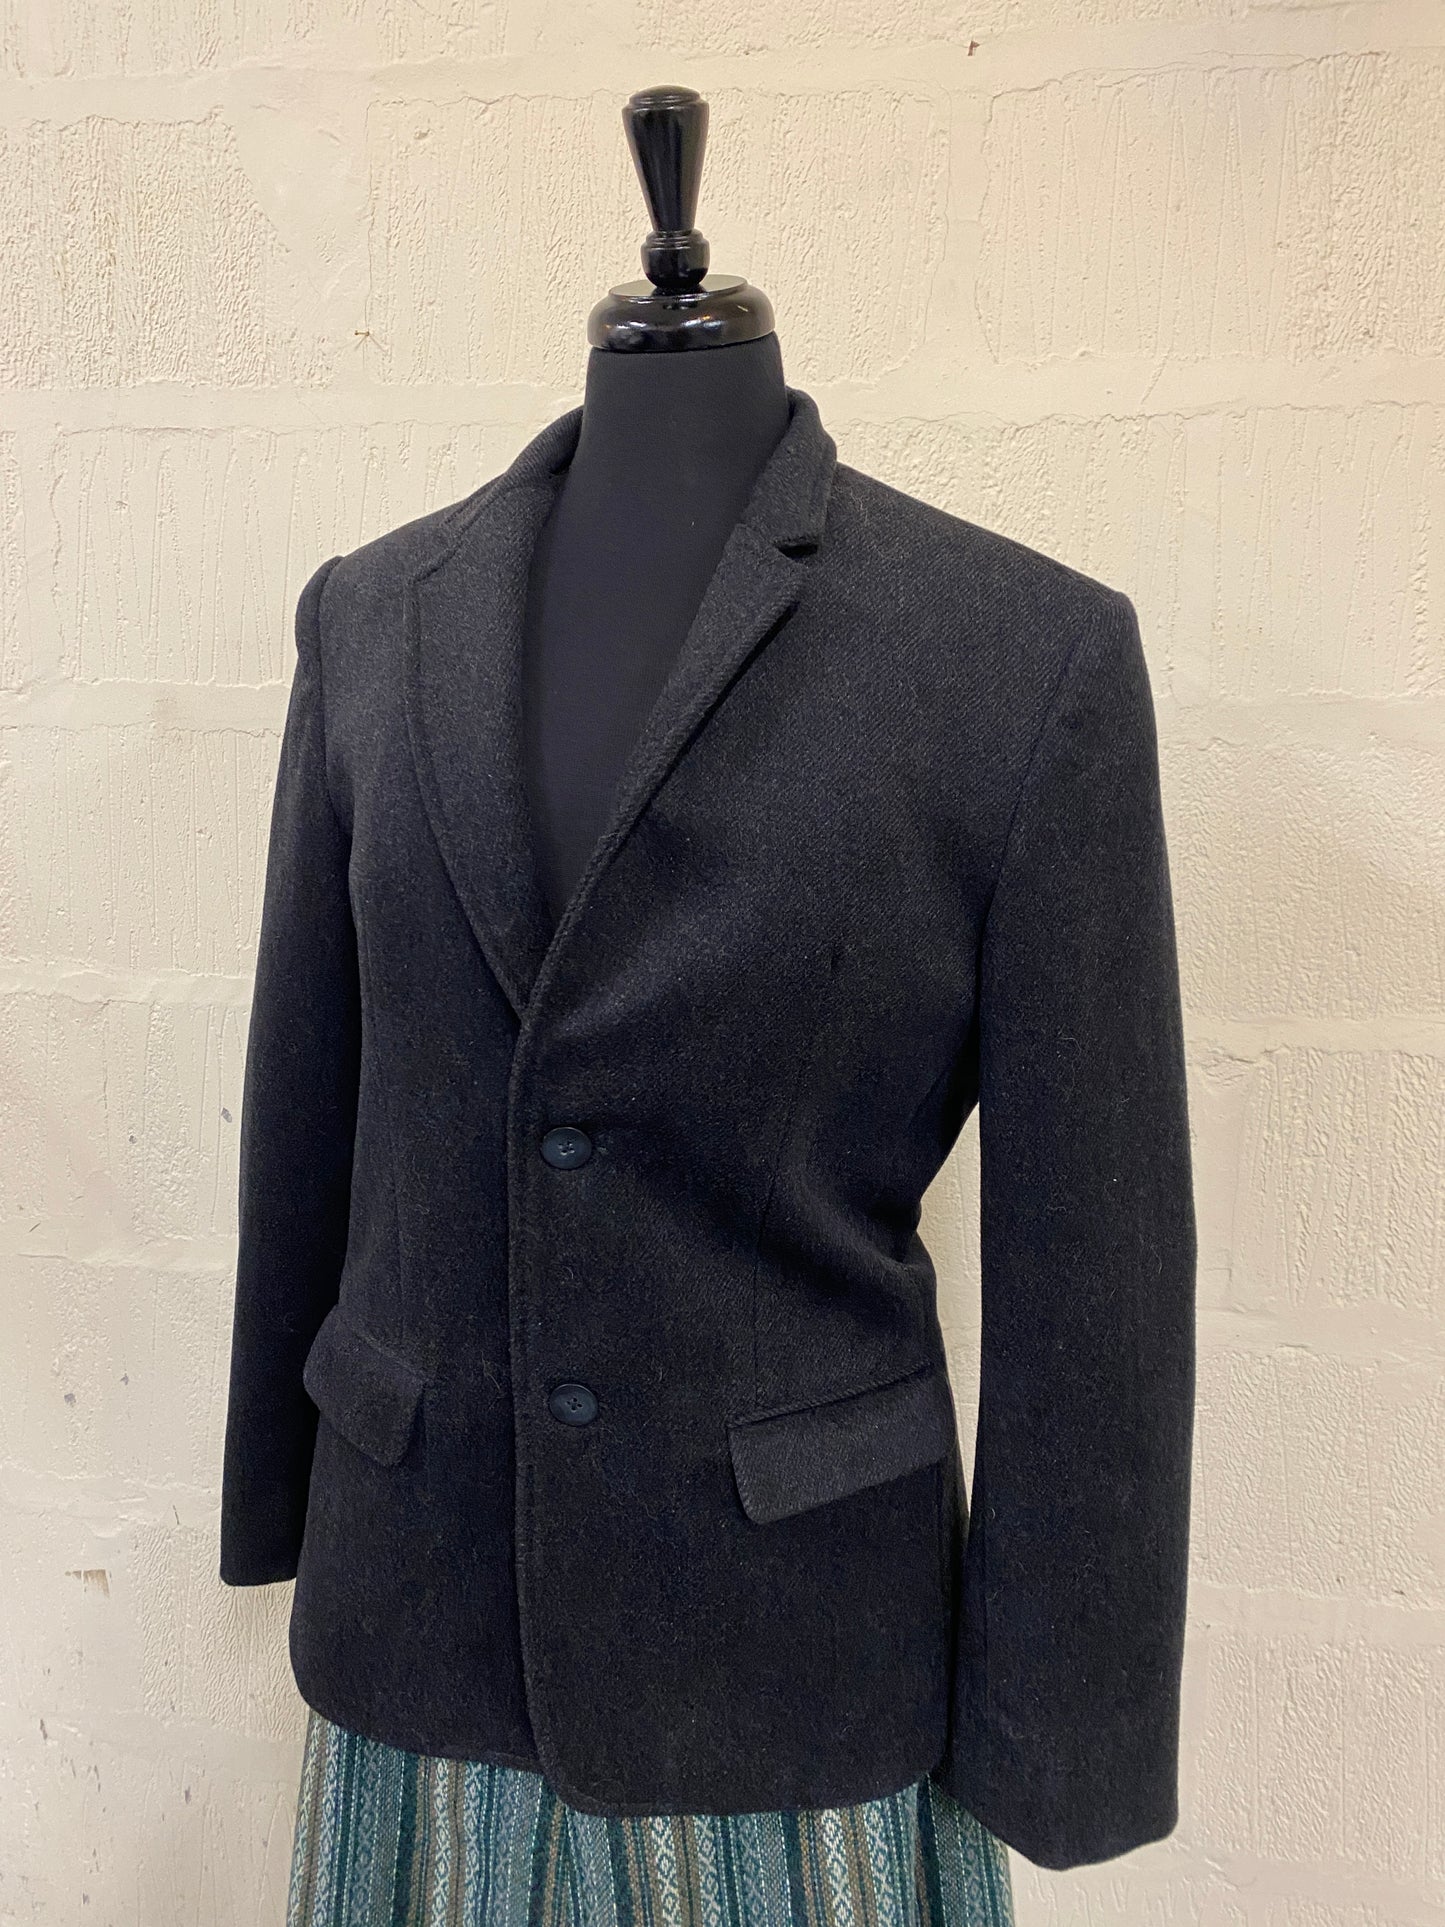 Charcoal Grey Wool Blend Coat Size 10